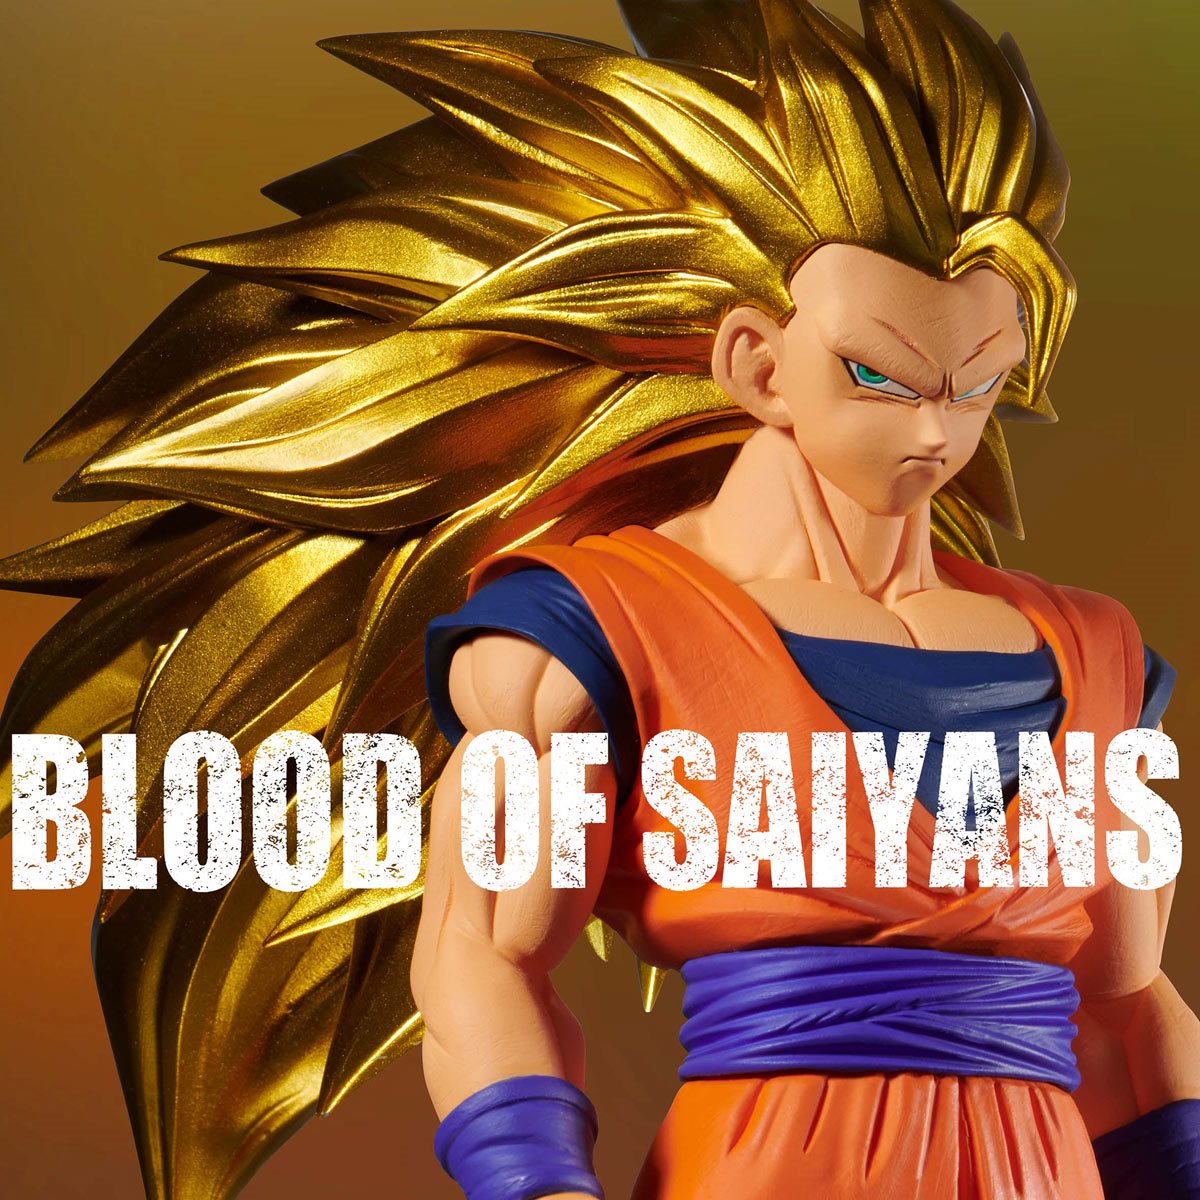 (PREVENTA) Dragon Ball Z Super Saiyan 3 Son Goku Blood of Saiyans Statue